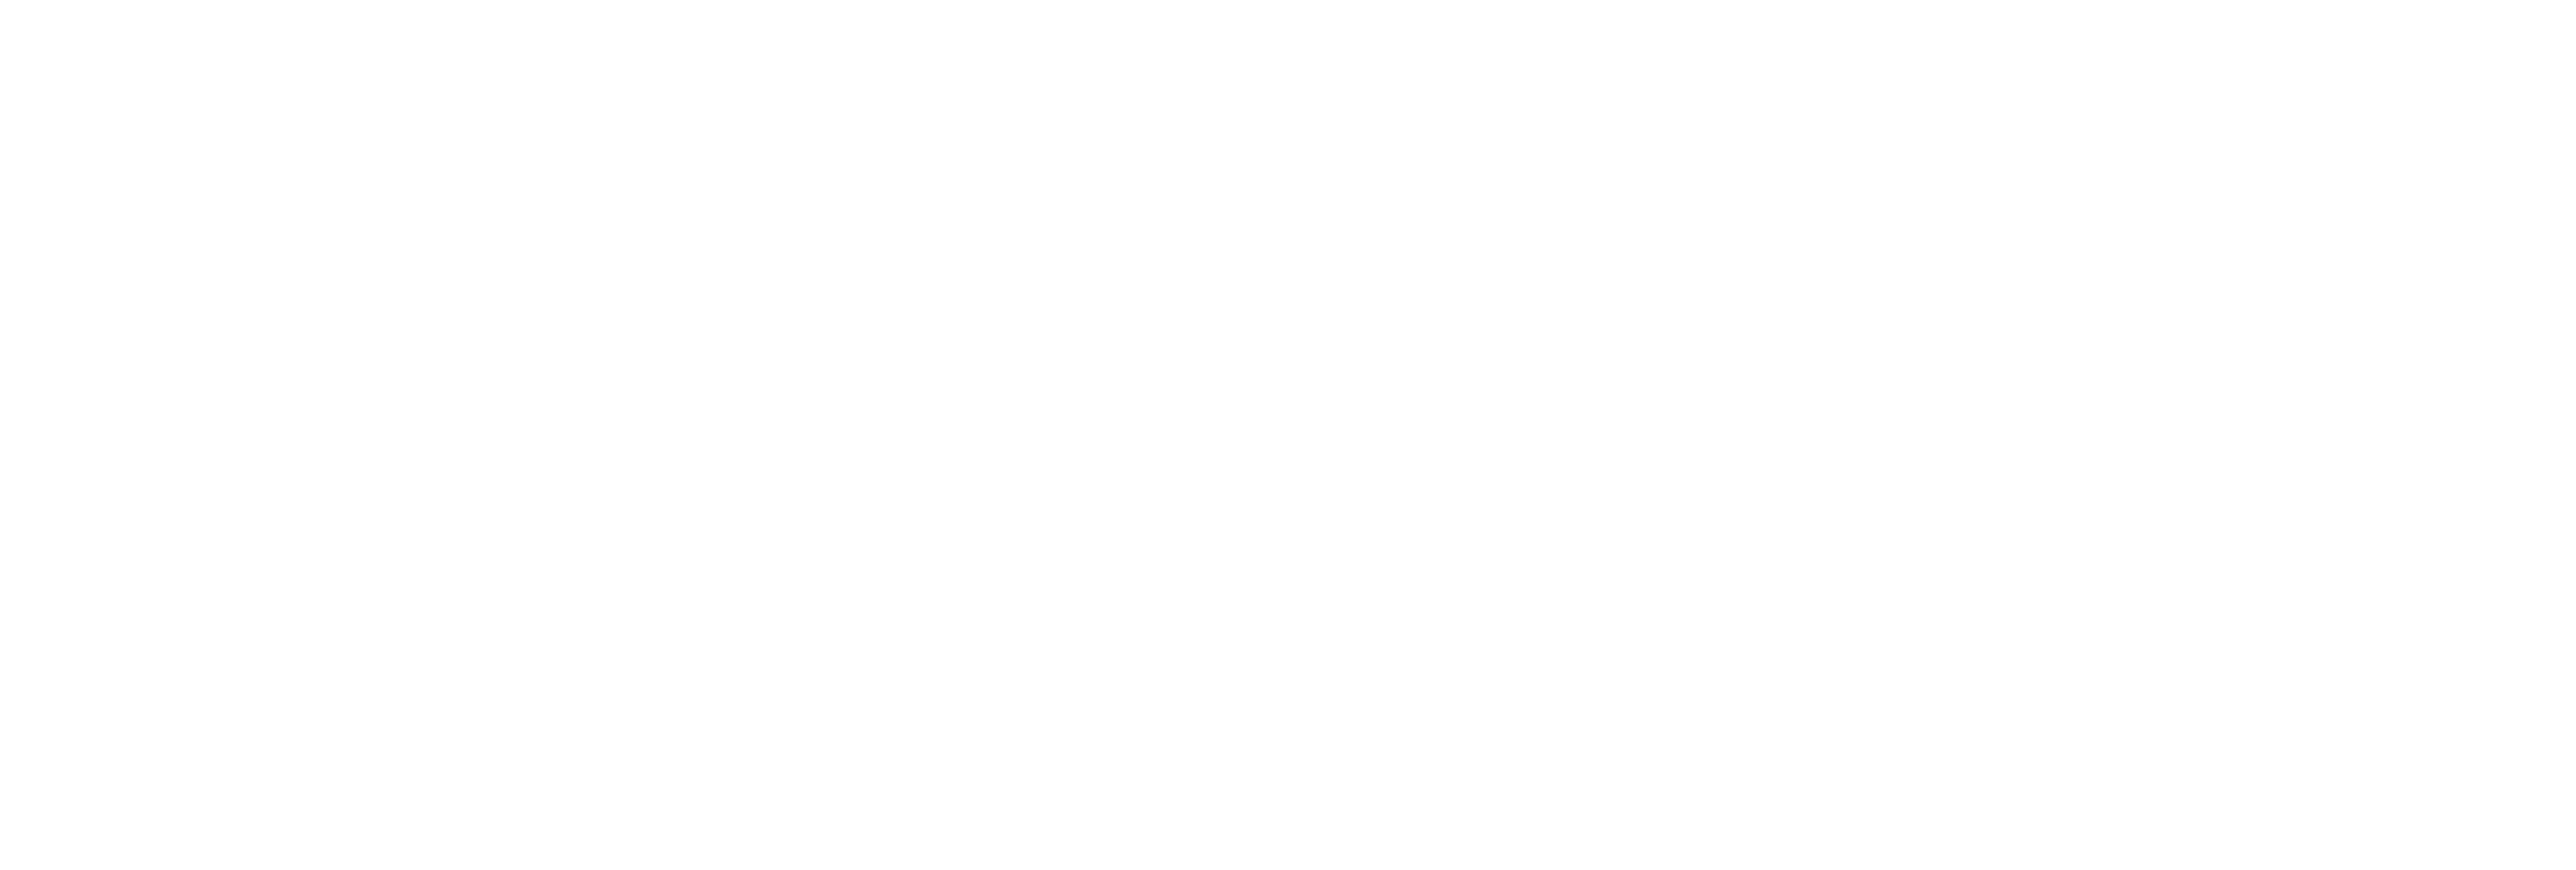 AniCura Dierenziekenhuis Oldenzaal logo